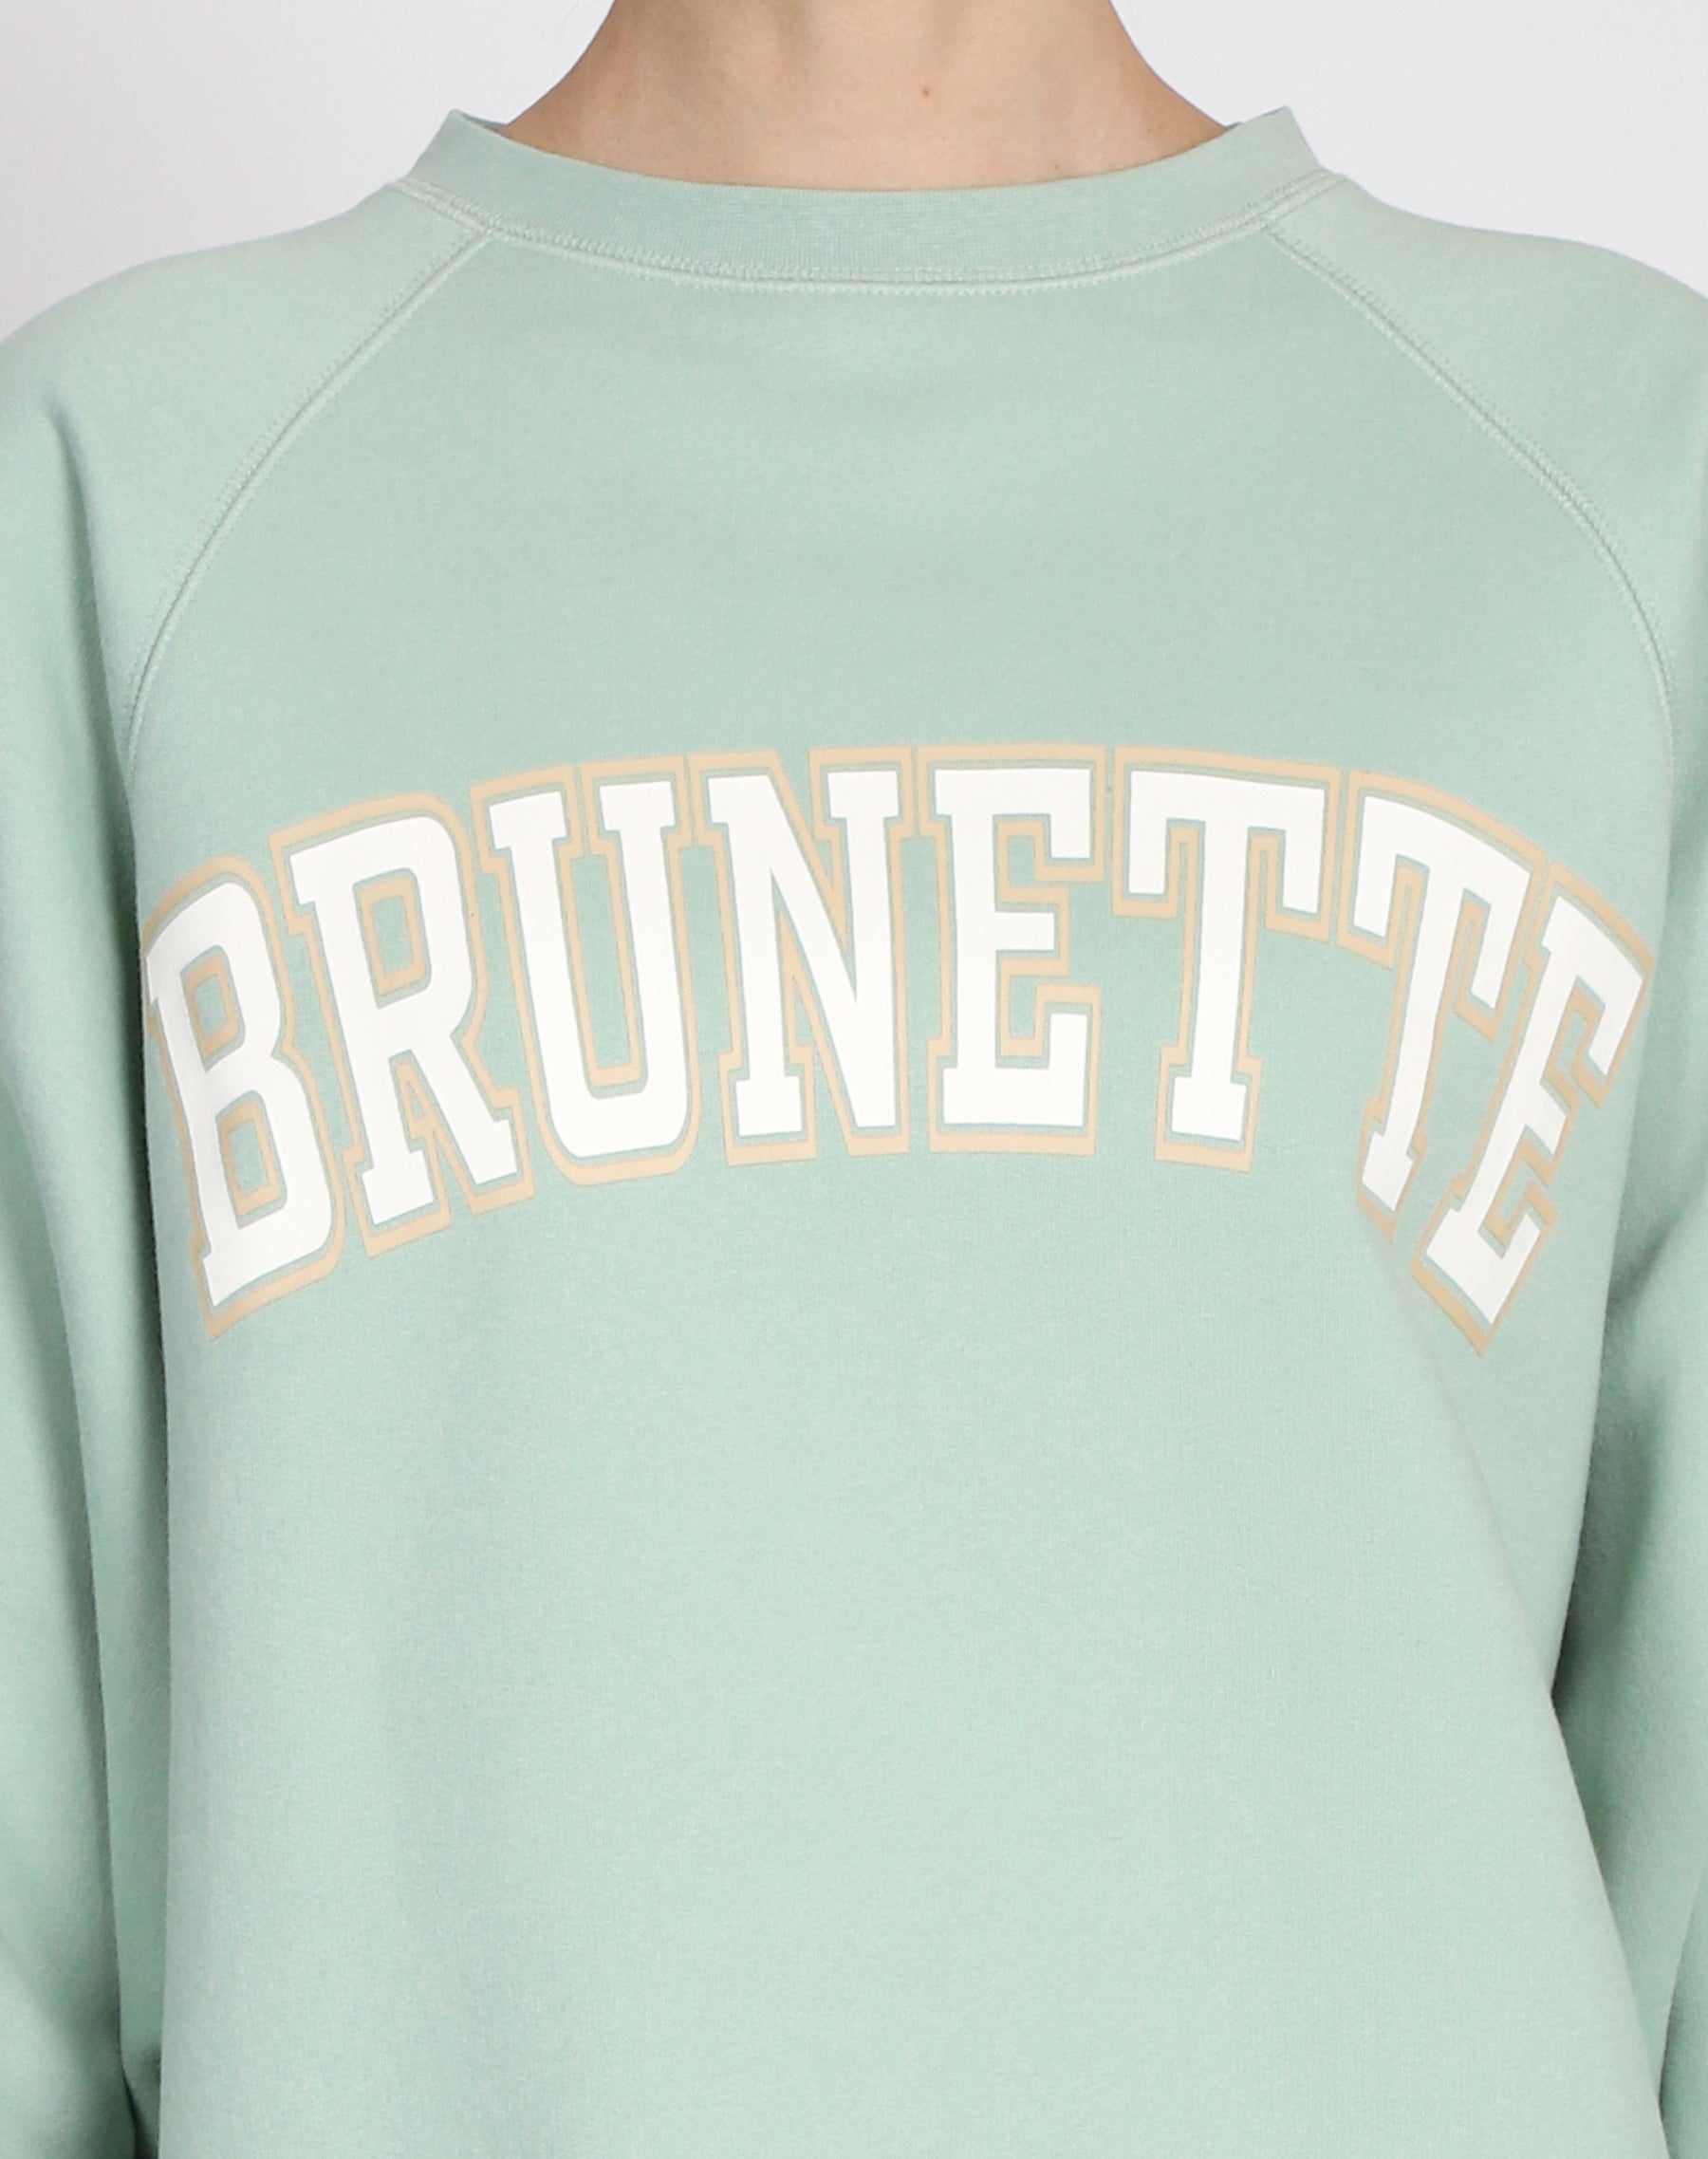 The "BRUNETTE" Not Your Boyfriend's Crew Neck Sweatshirt | Sage